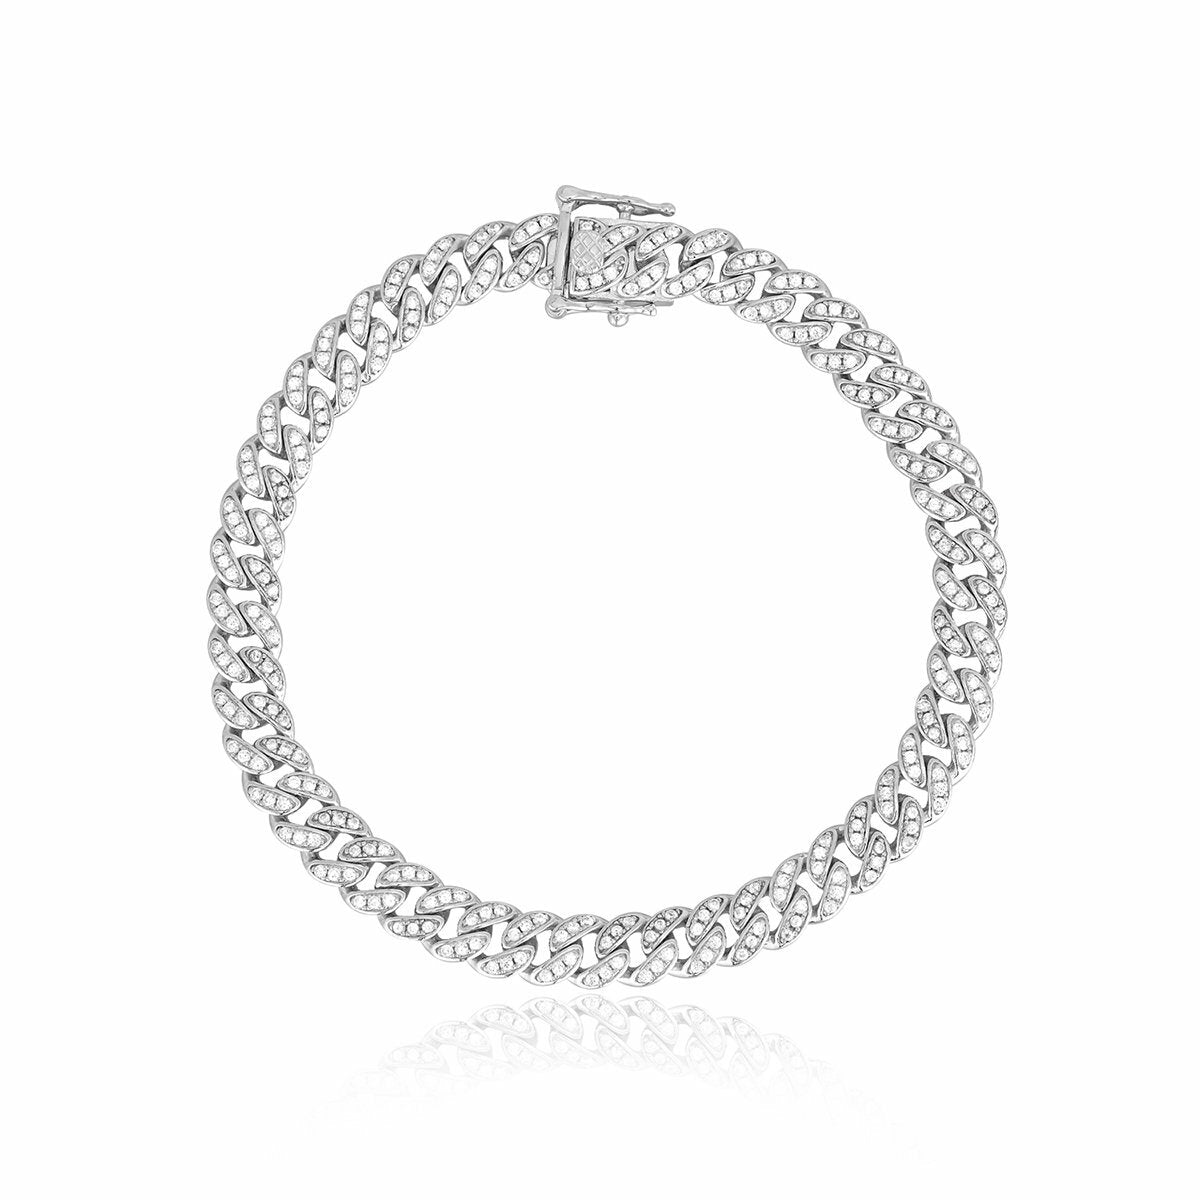 Groumette Bracelet in Silver Mabina Gioielli 533334-S